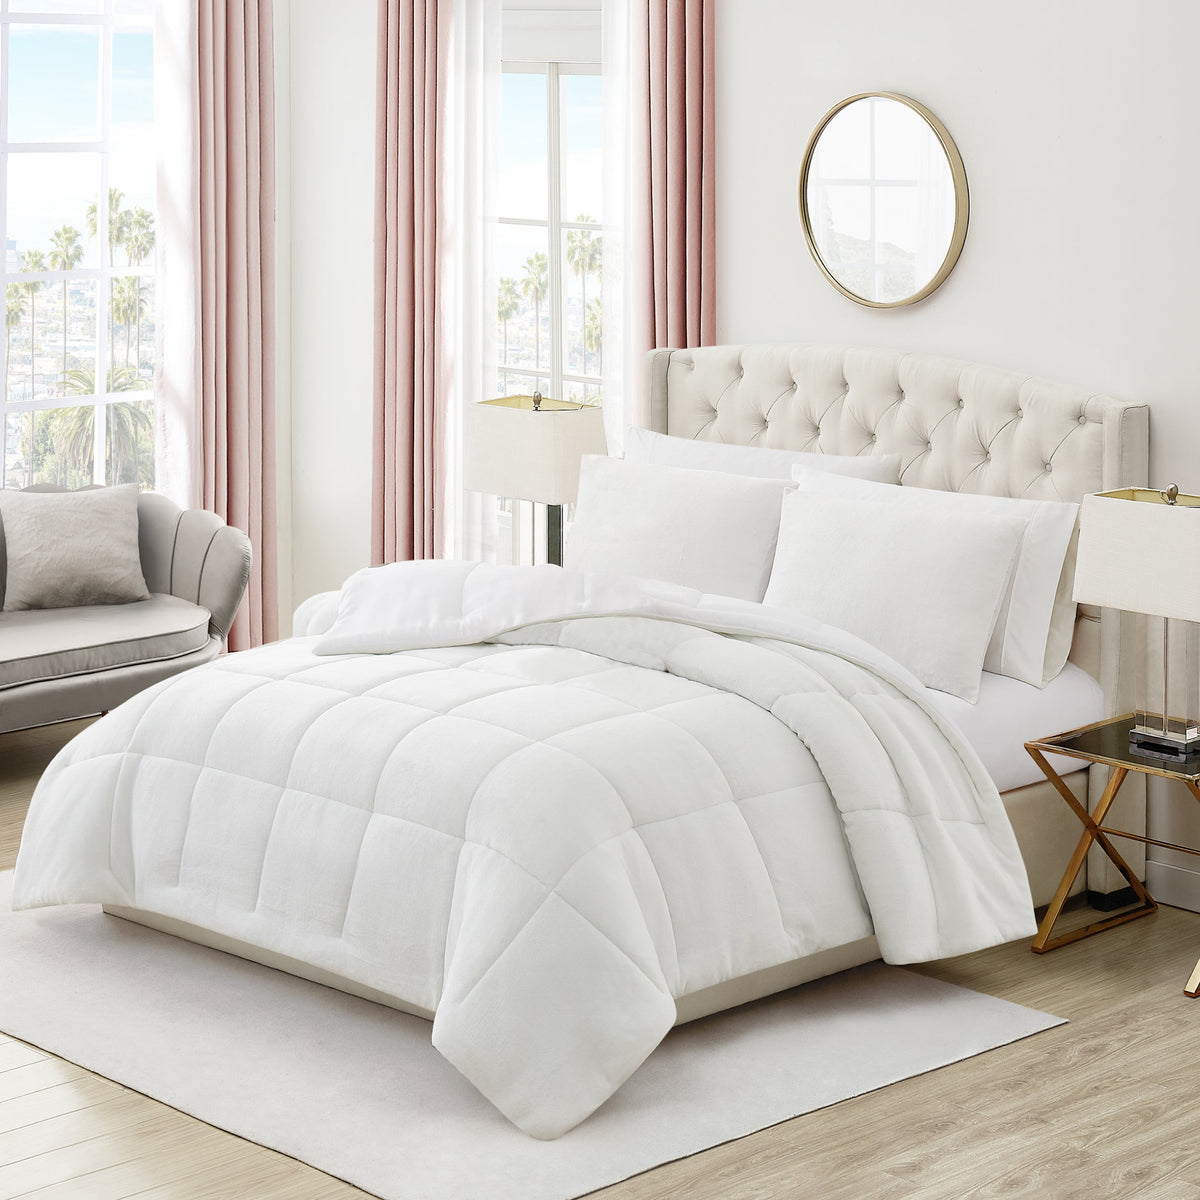 Juicy Couture Plush Comforter Set White